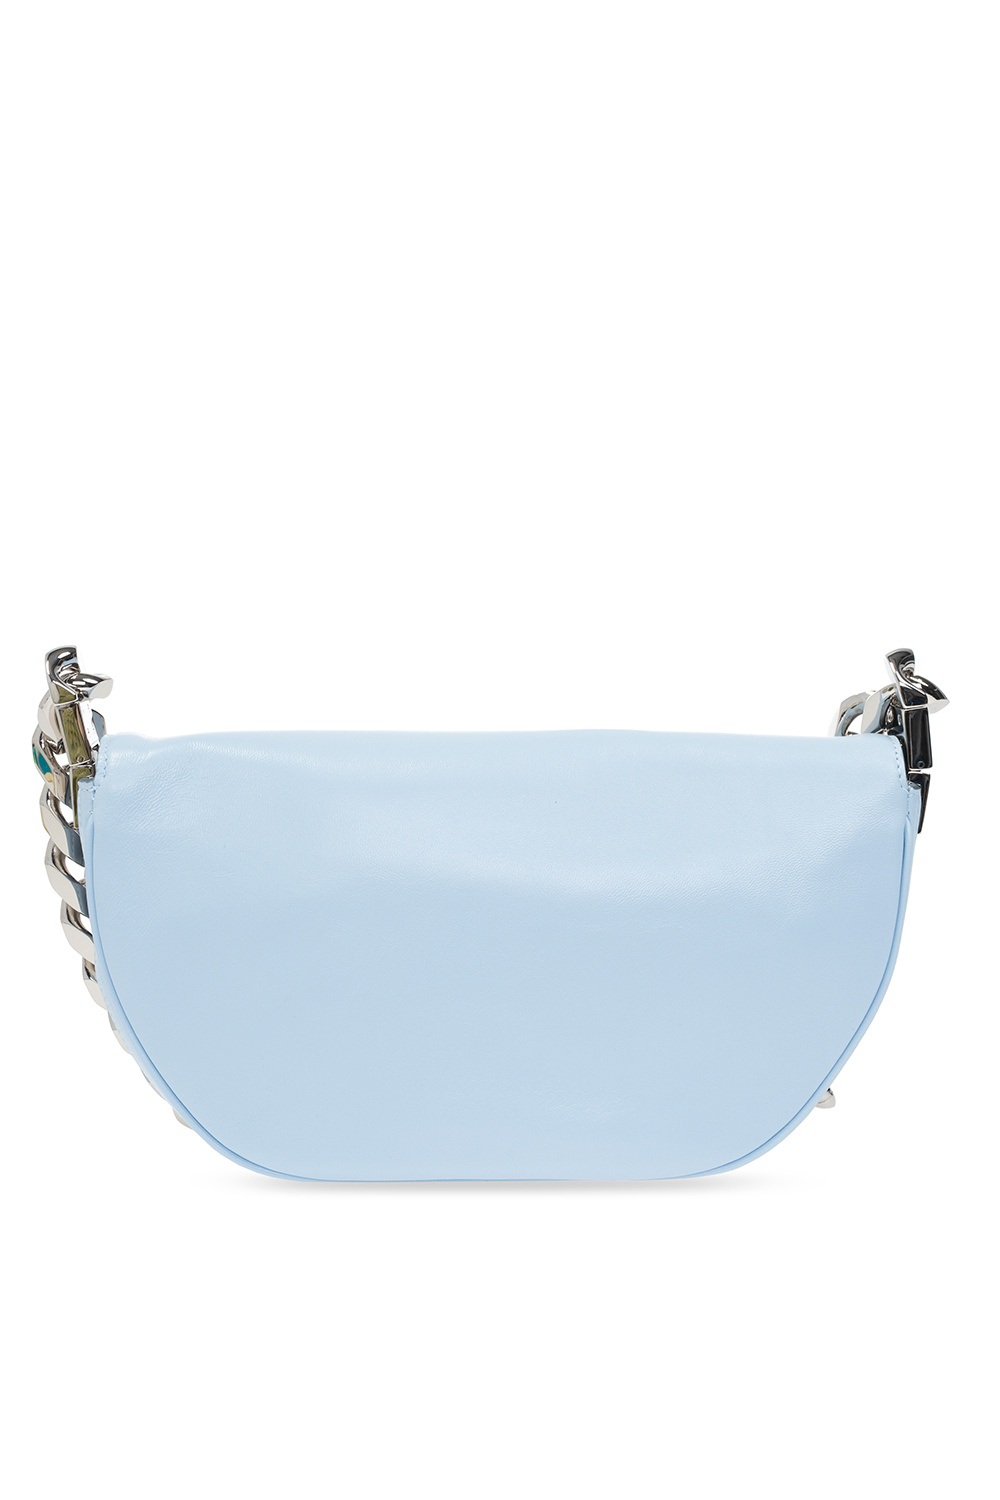 Burberry 'Olympia' shoulder bag | Women's Bags | Vitkac